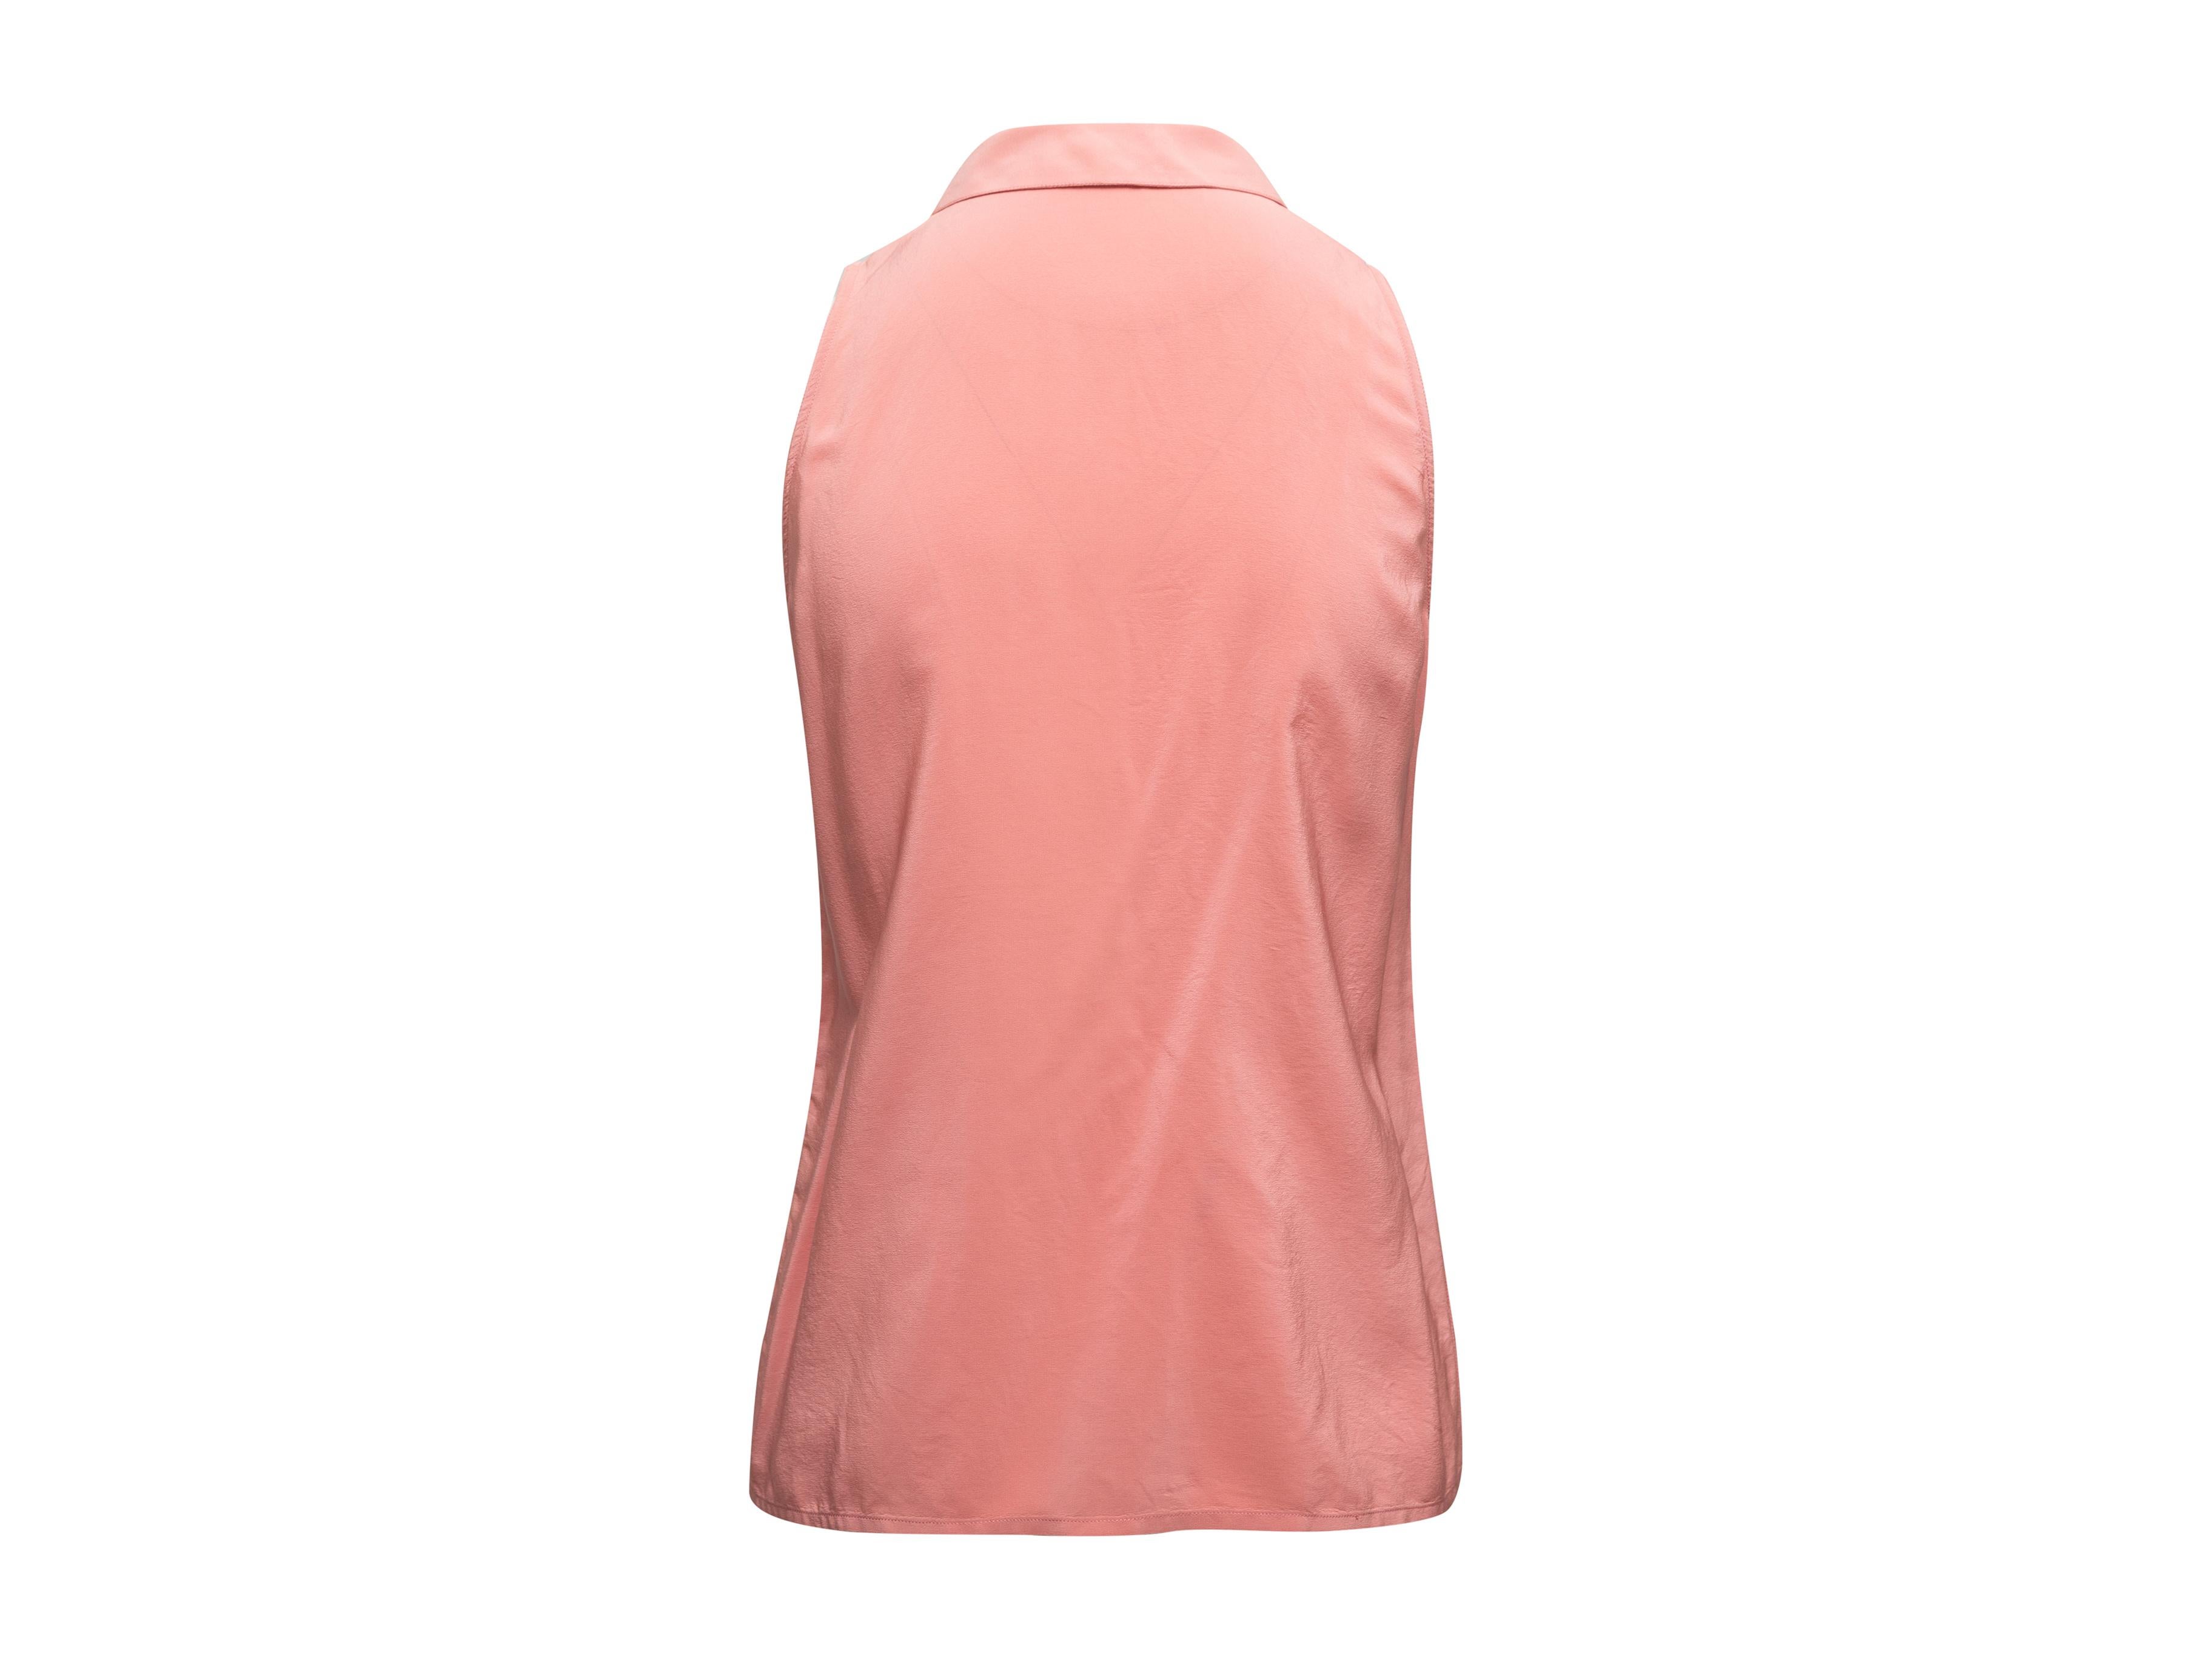 pink chanel button up shirt